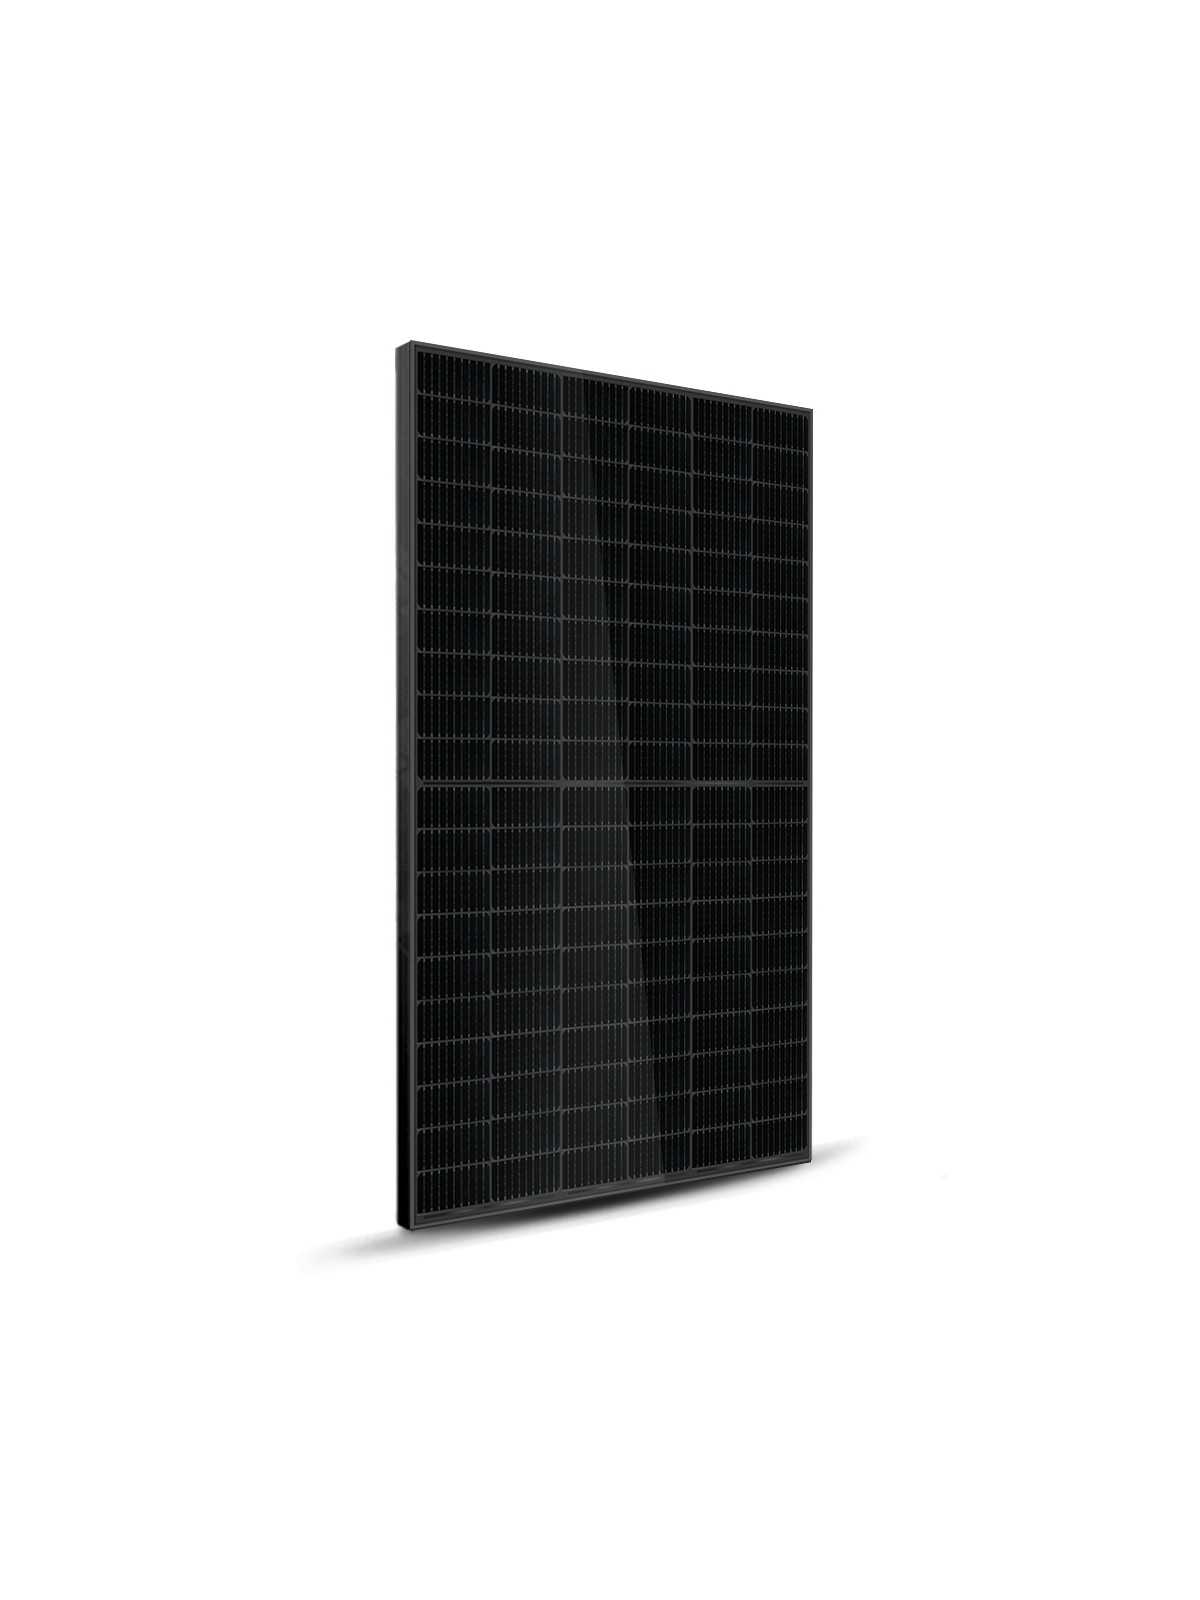 Omnis Solar Power Cortex Bifaciale 445 Wc NF3 Series Panneau solaire